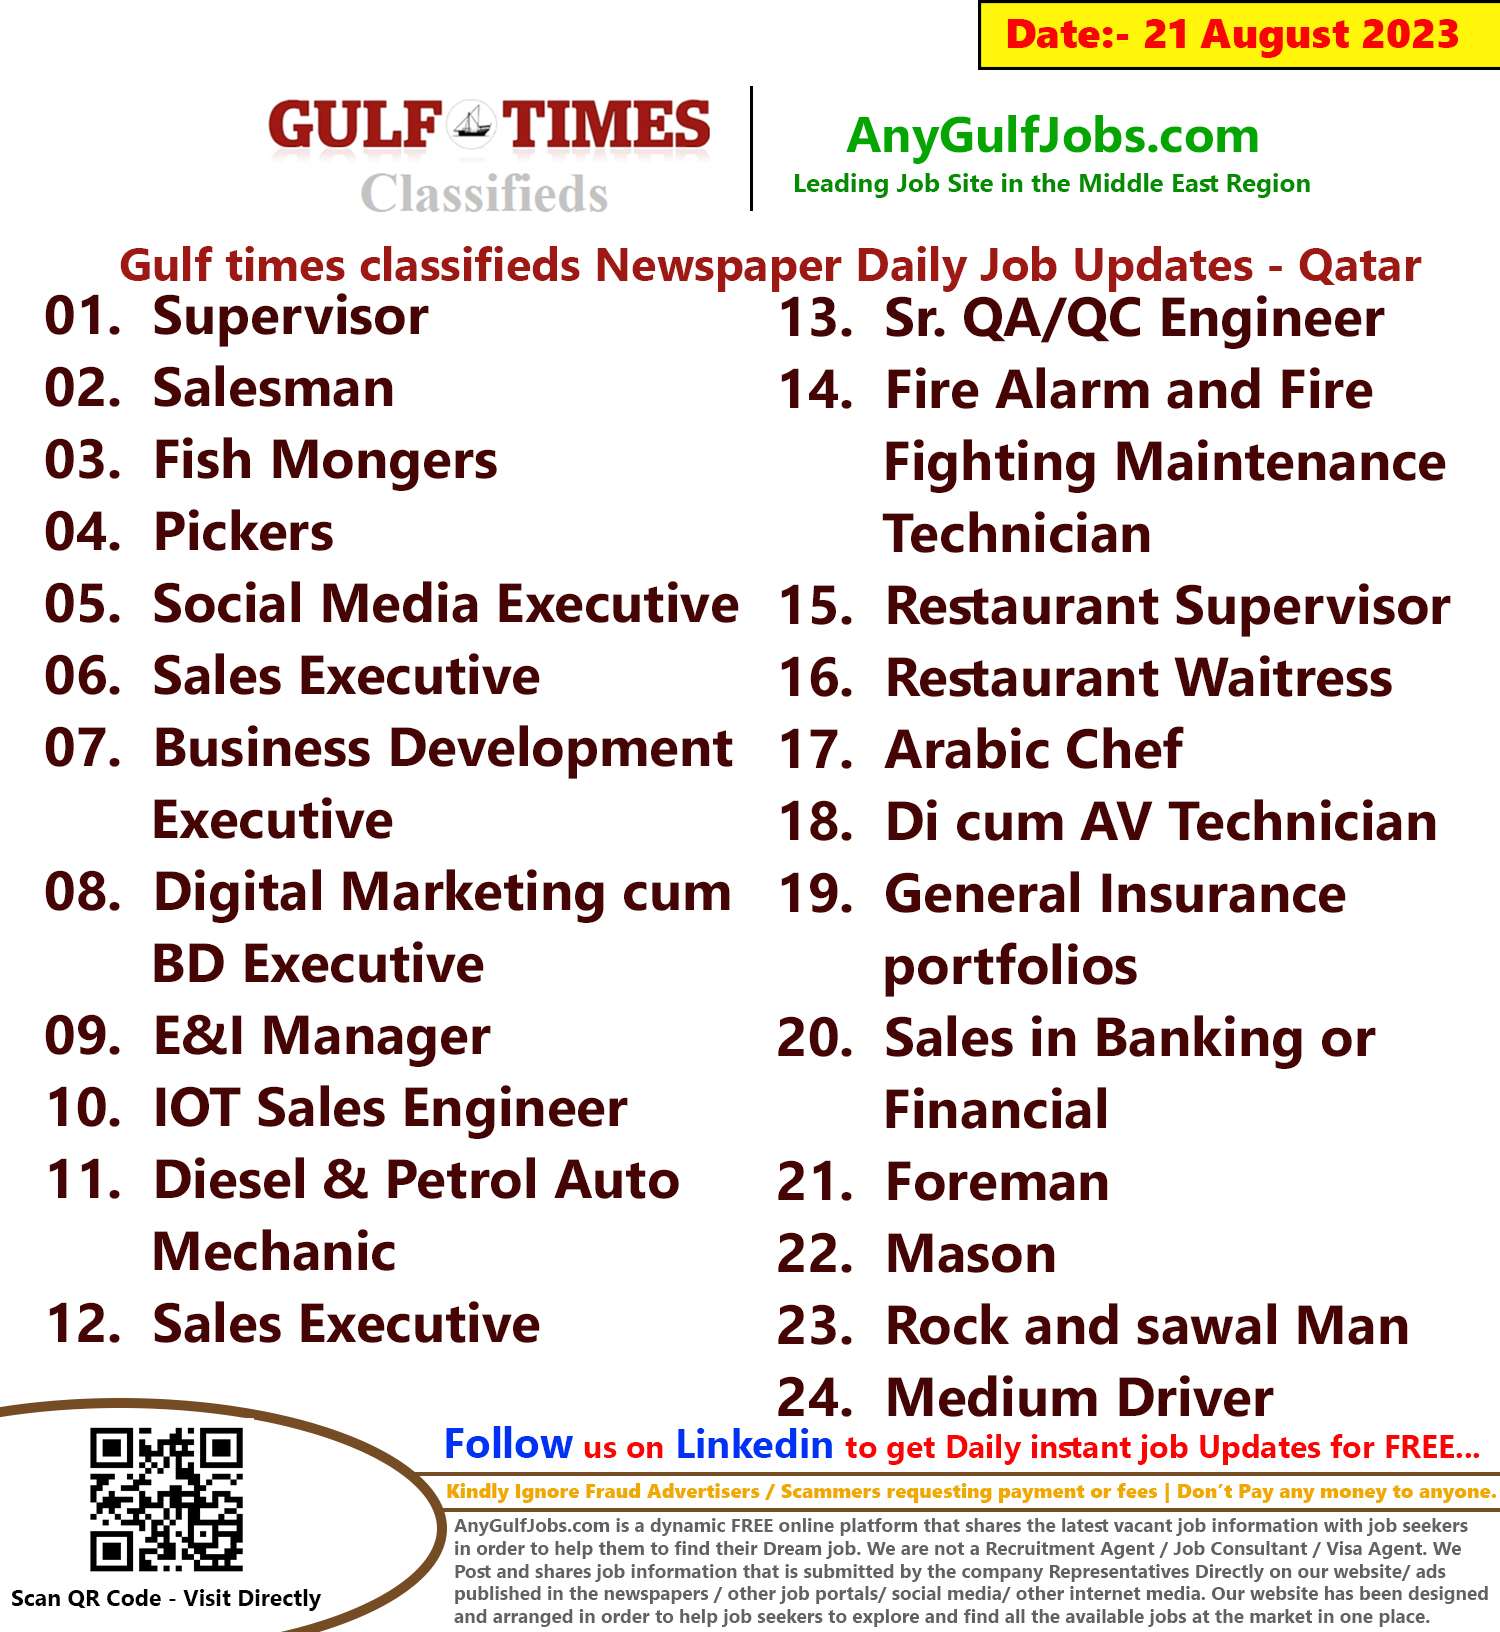 Gulf times classifieds Job Vacancies Qatar - 21 August 2023